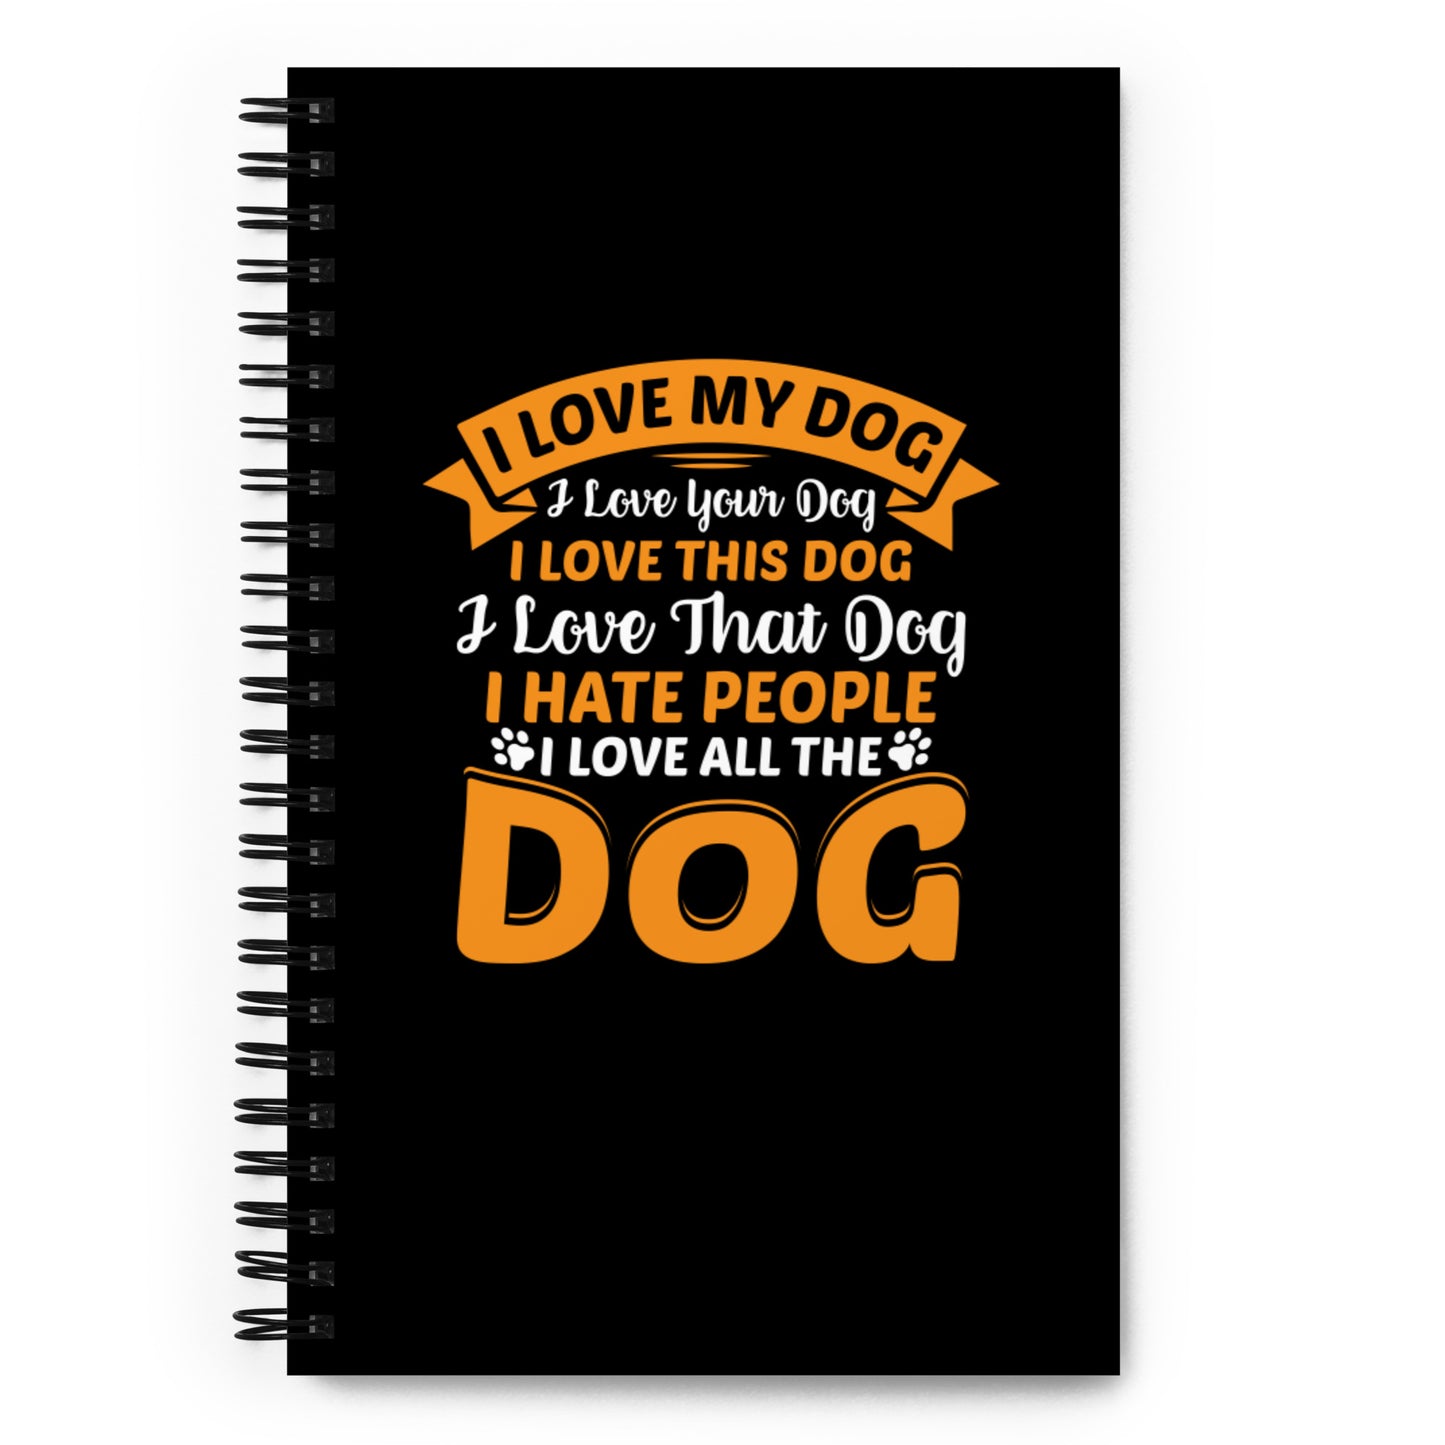 I Love My Dog Spiral notebook